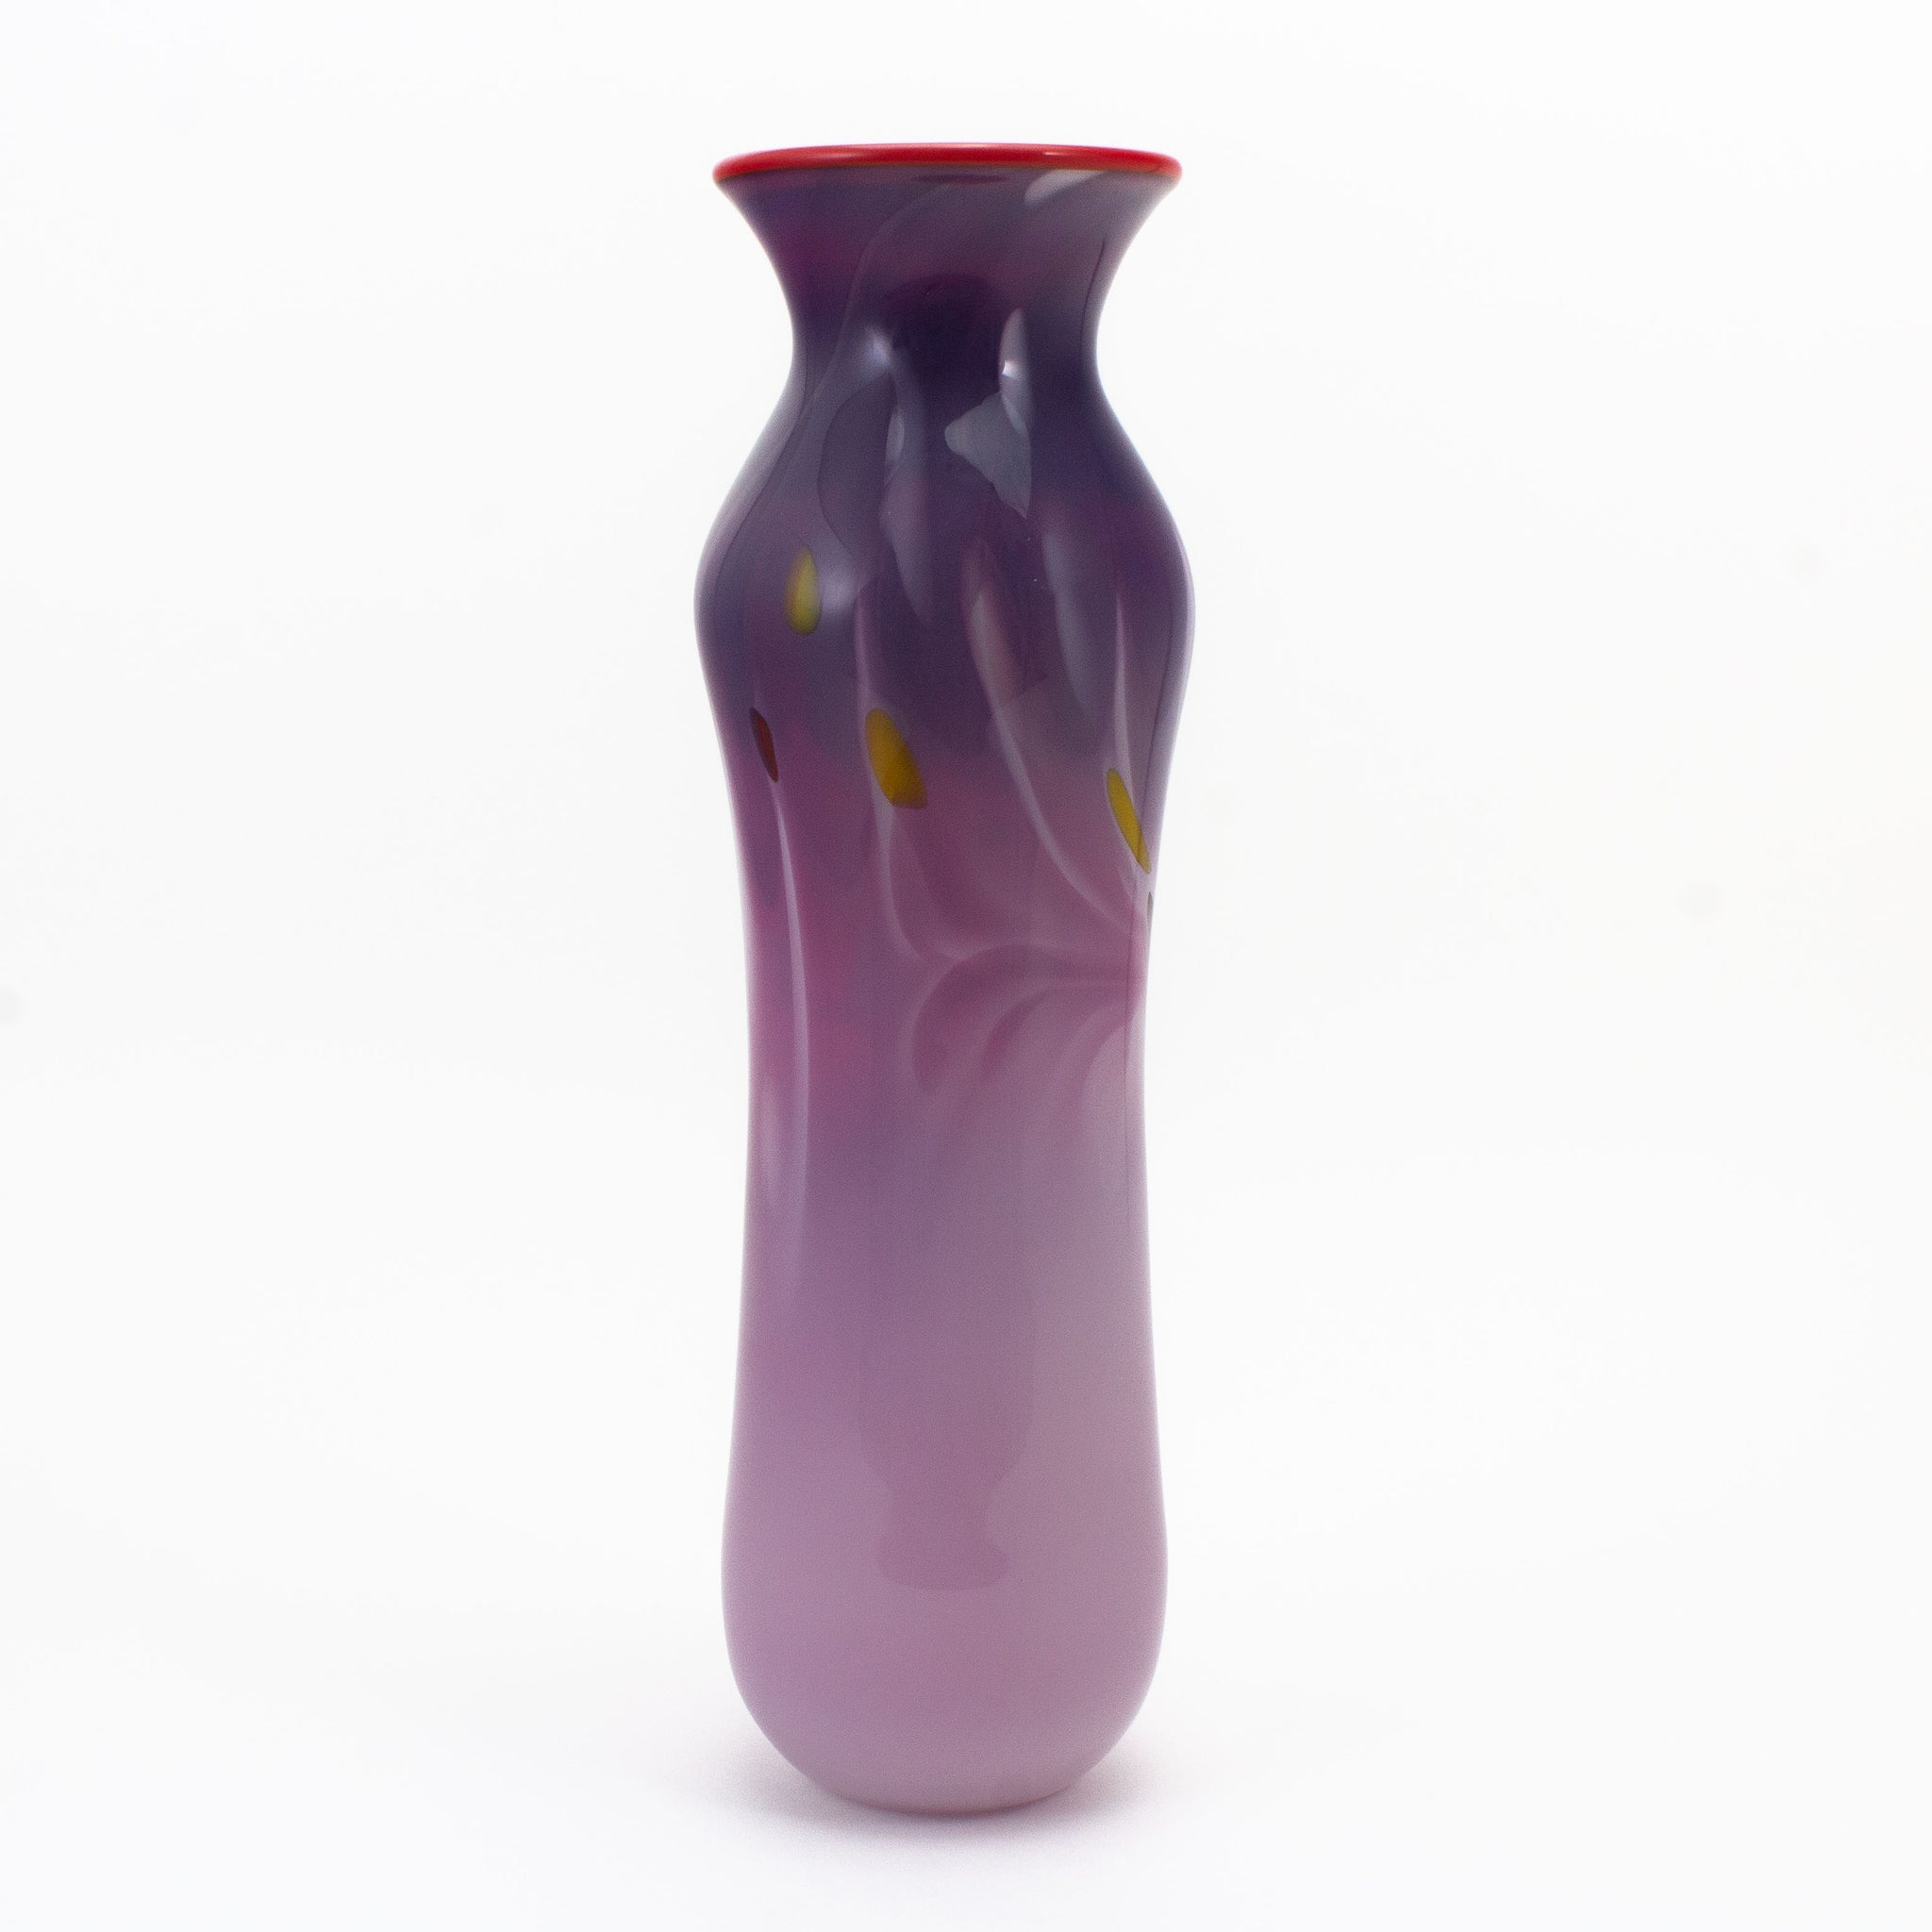 Lady Lavender Enigma Vase